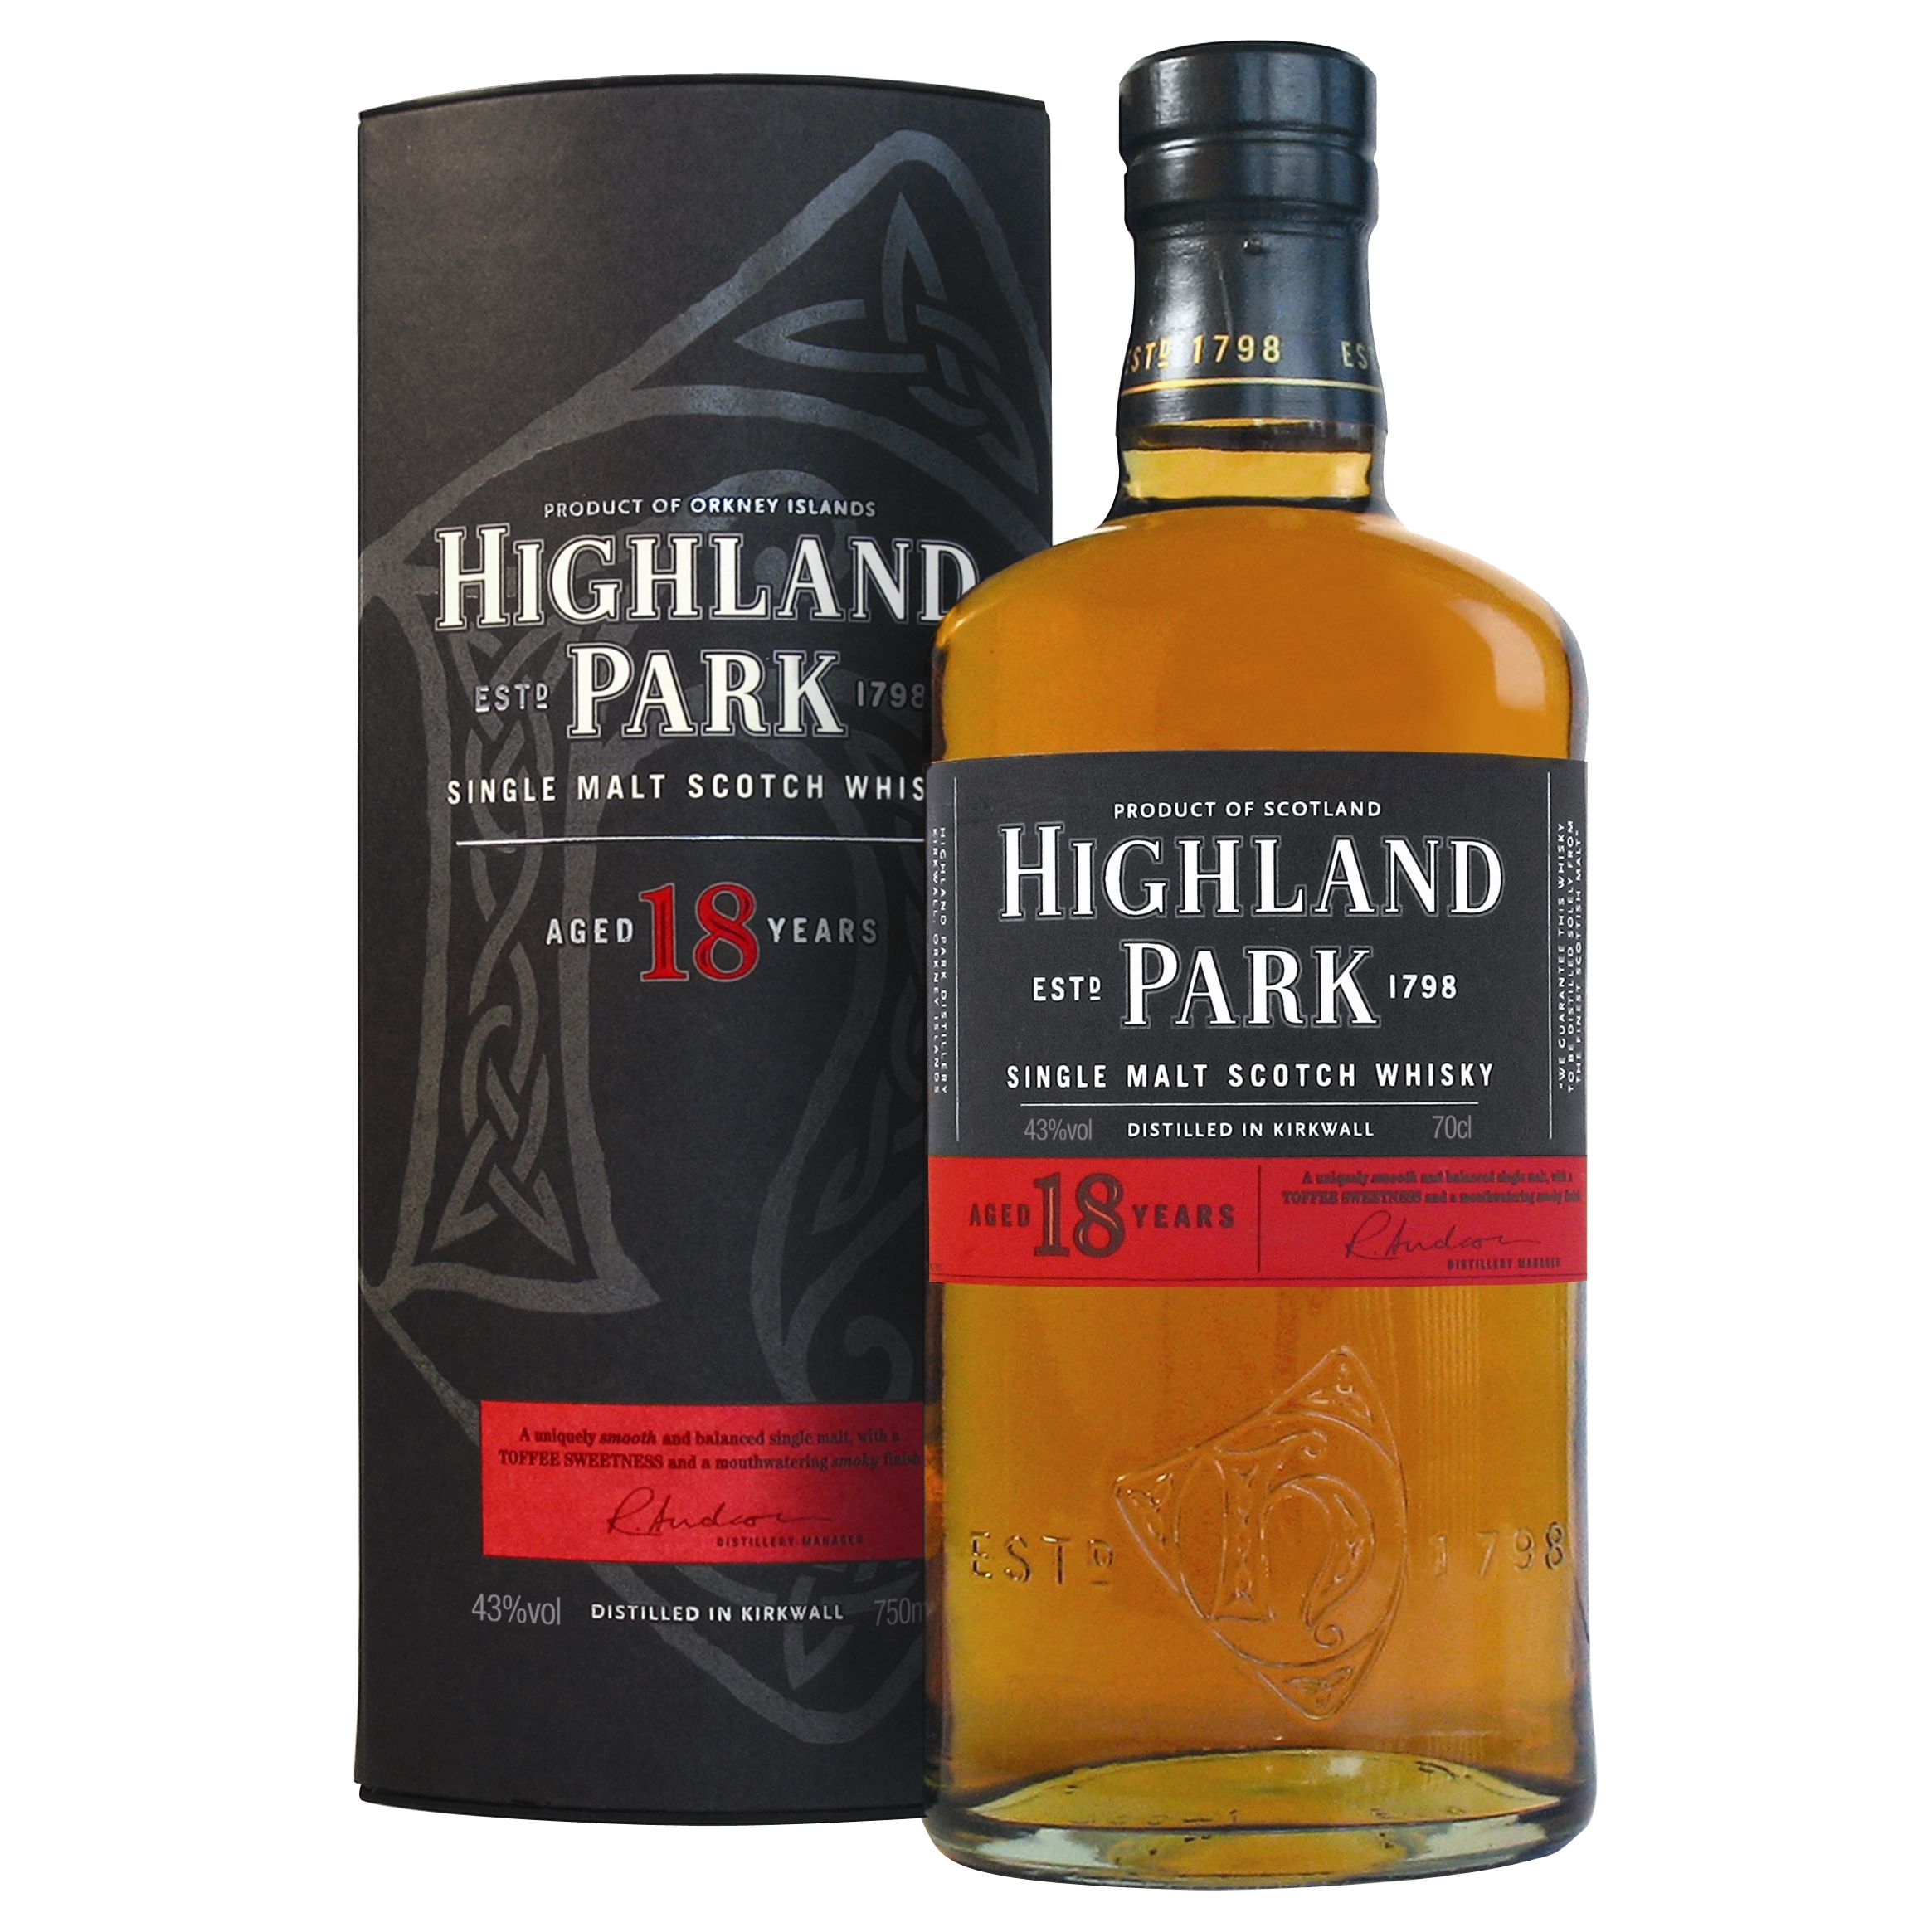 Highland Park 18-Year-Old Single Malt Whisky at John Lewis